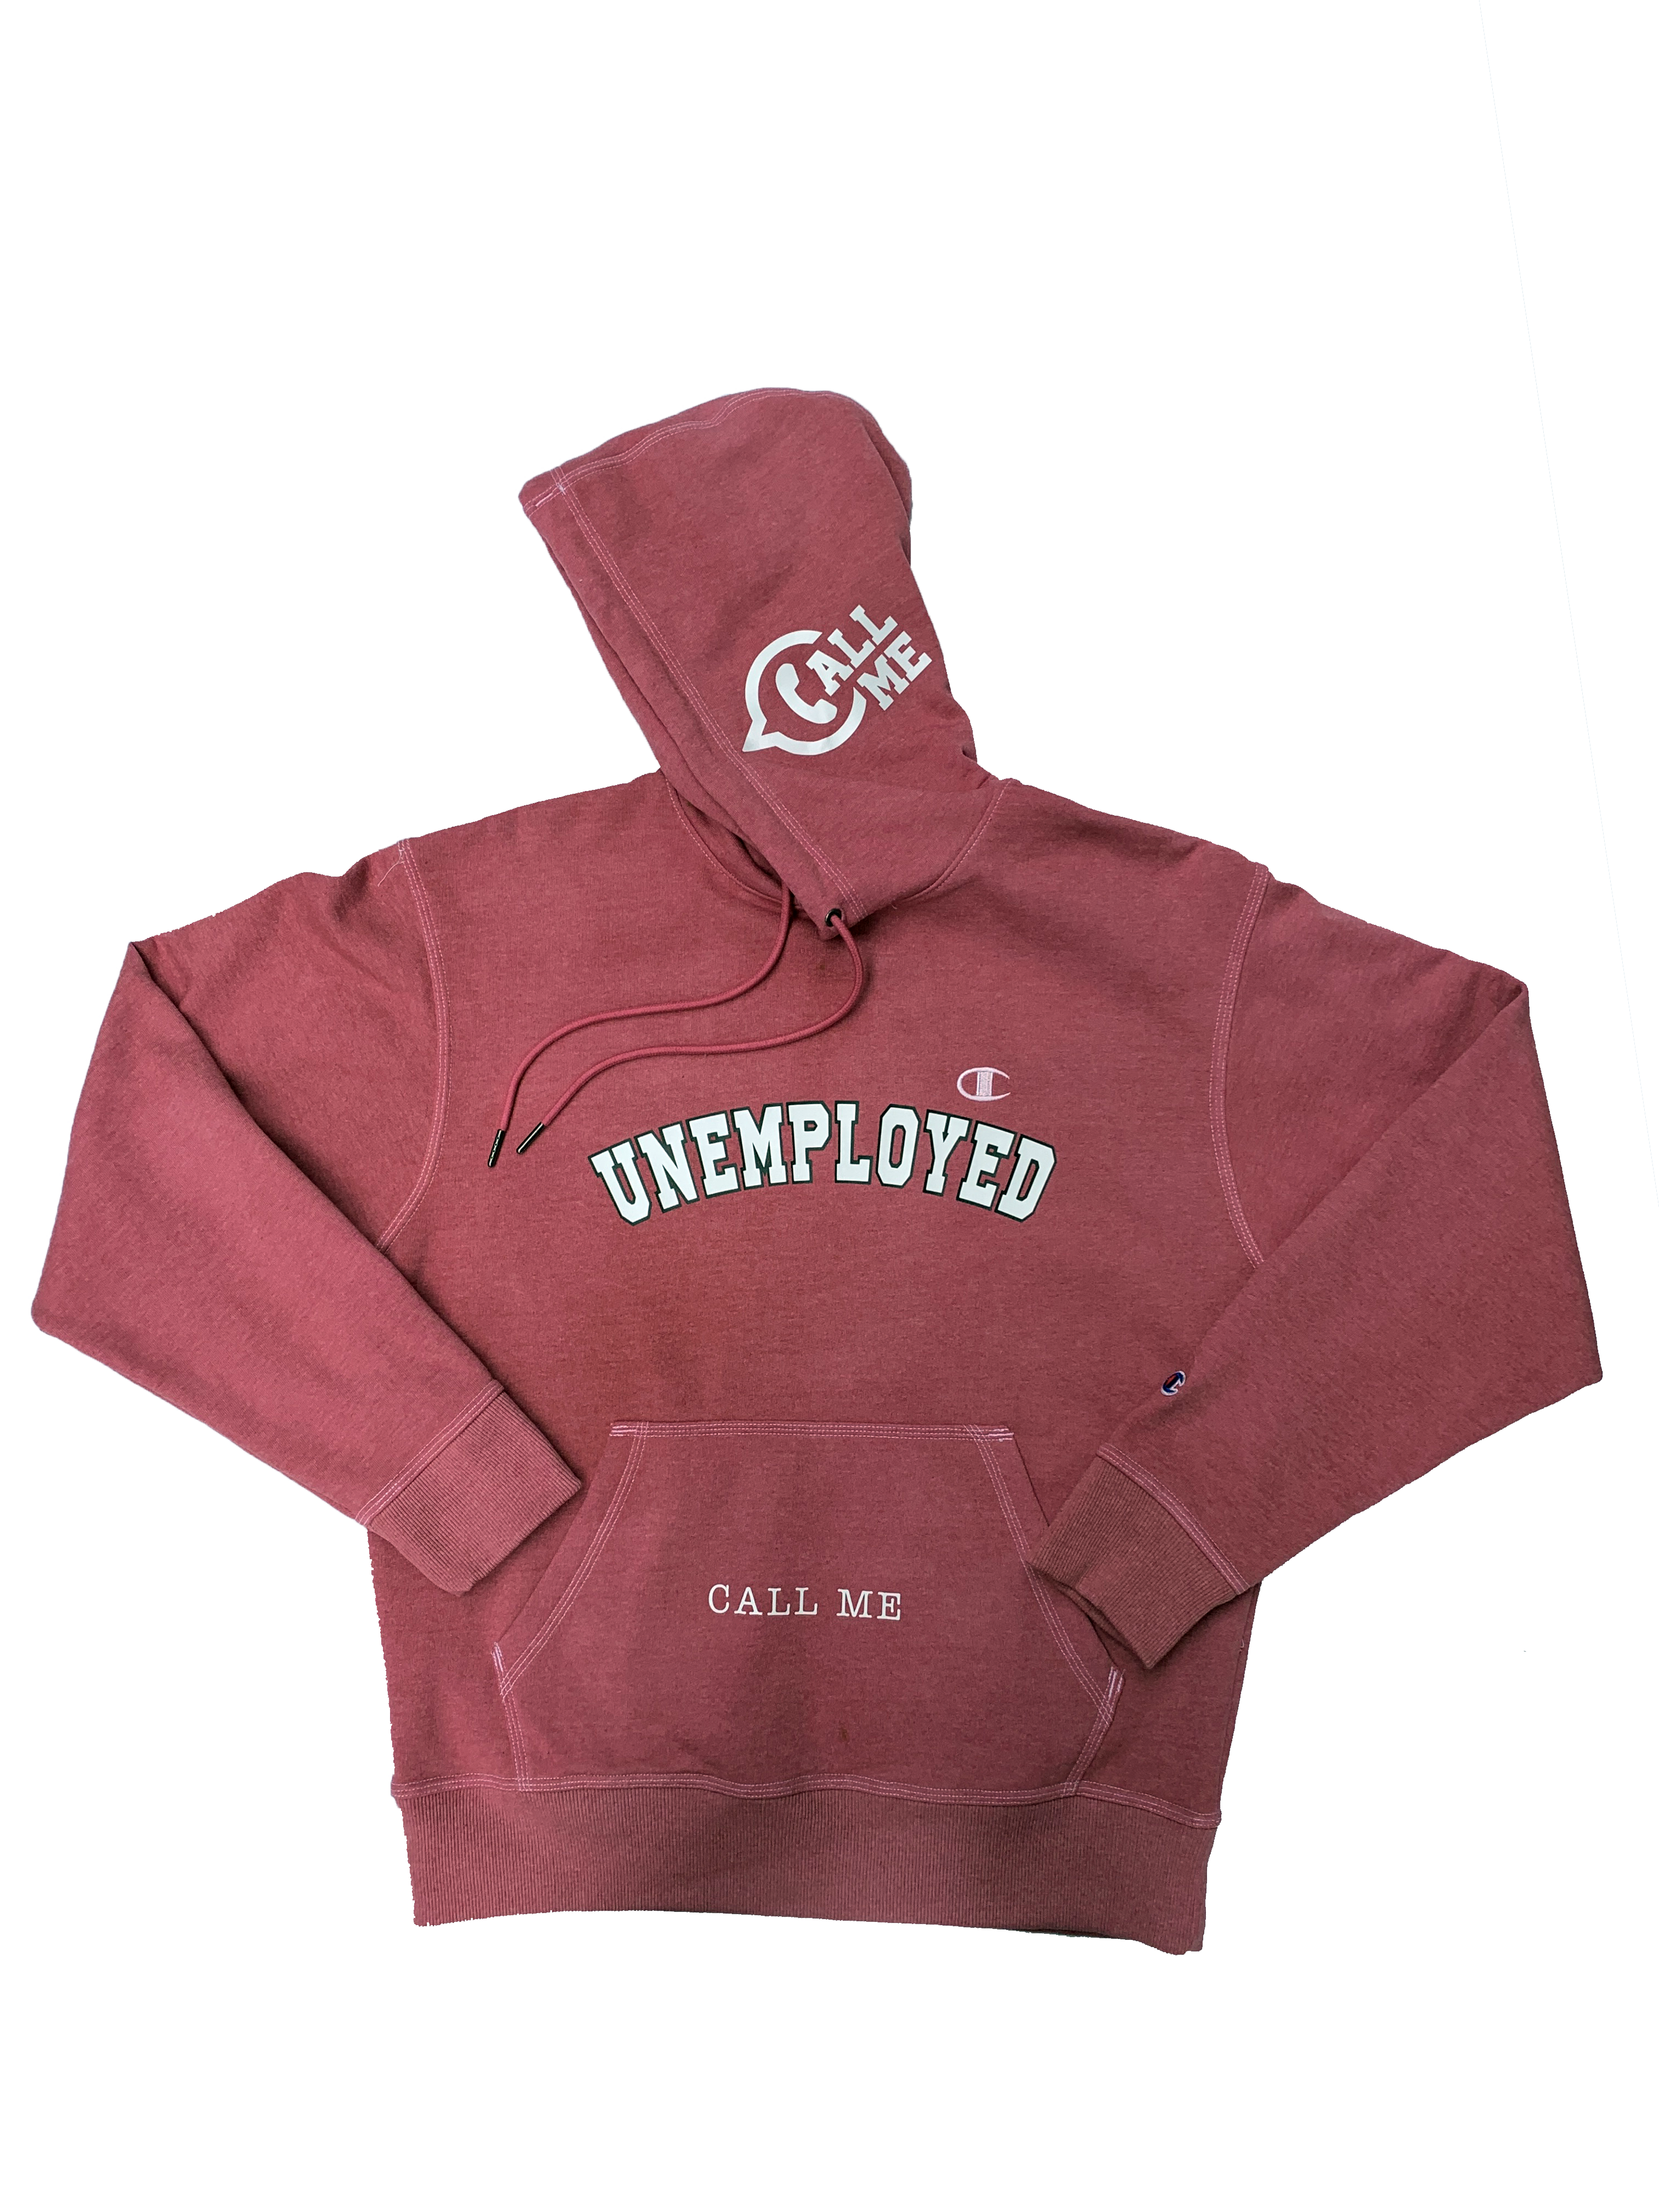 champion hoodie wine red